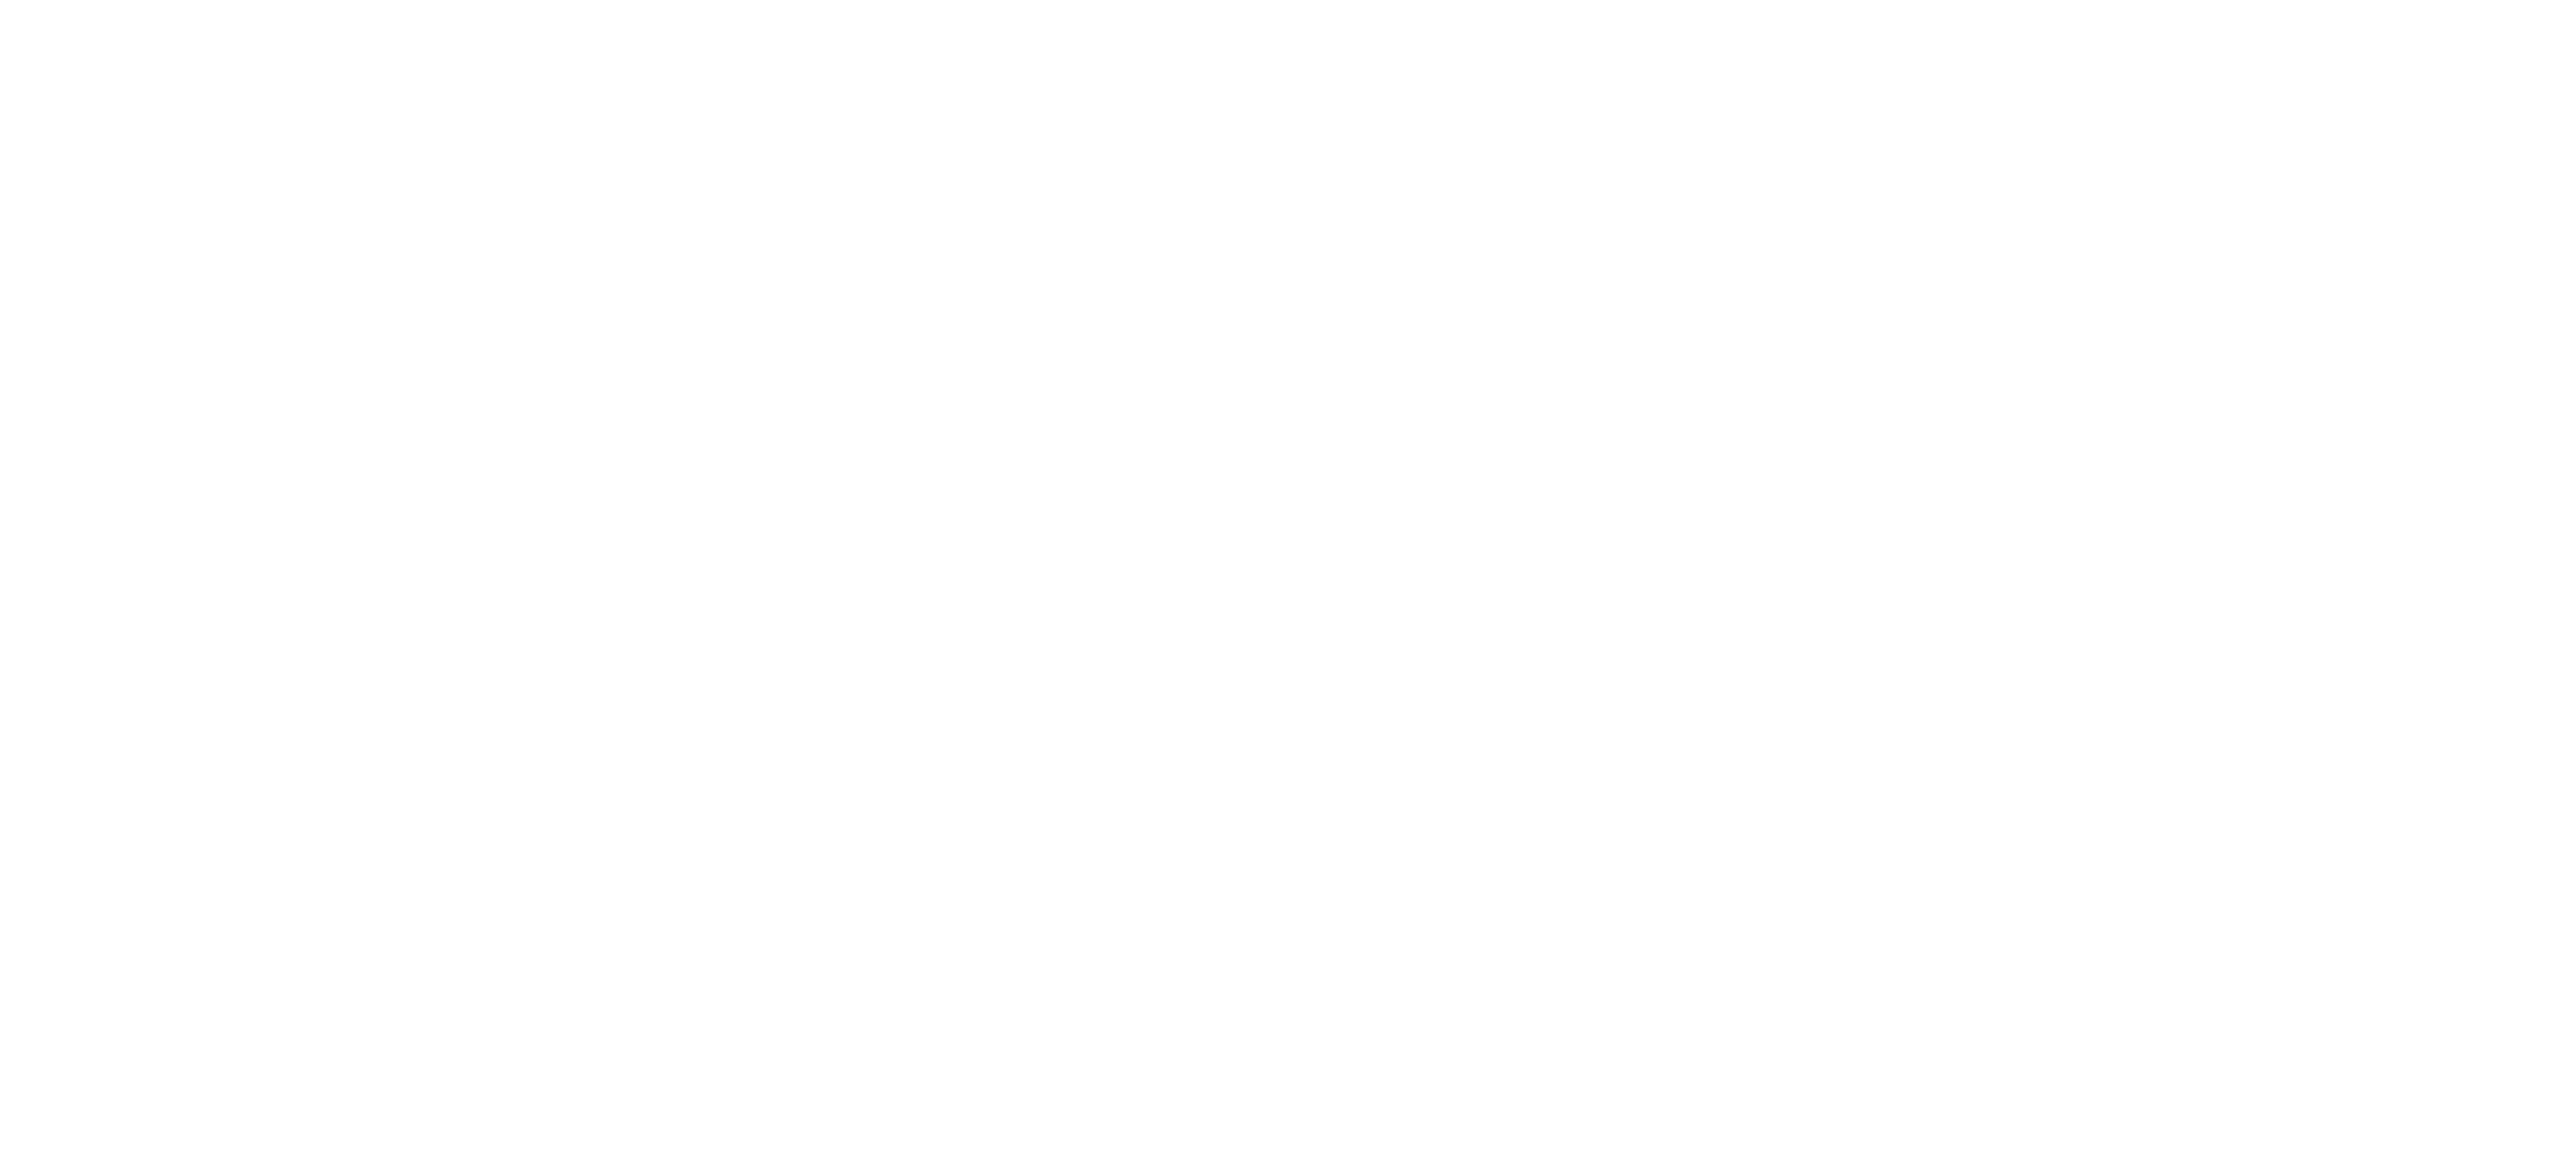 226Lab - Creative Agency Switzerland